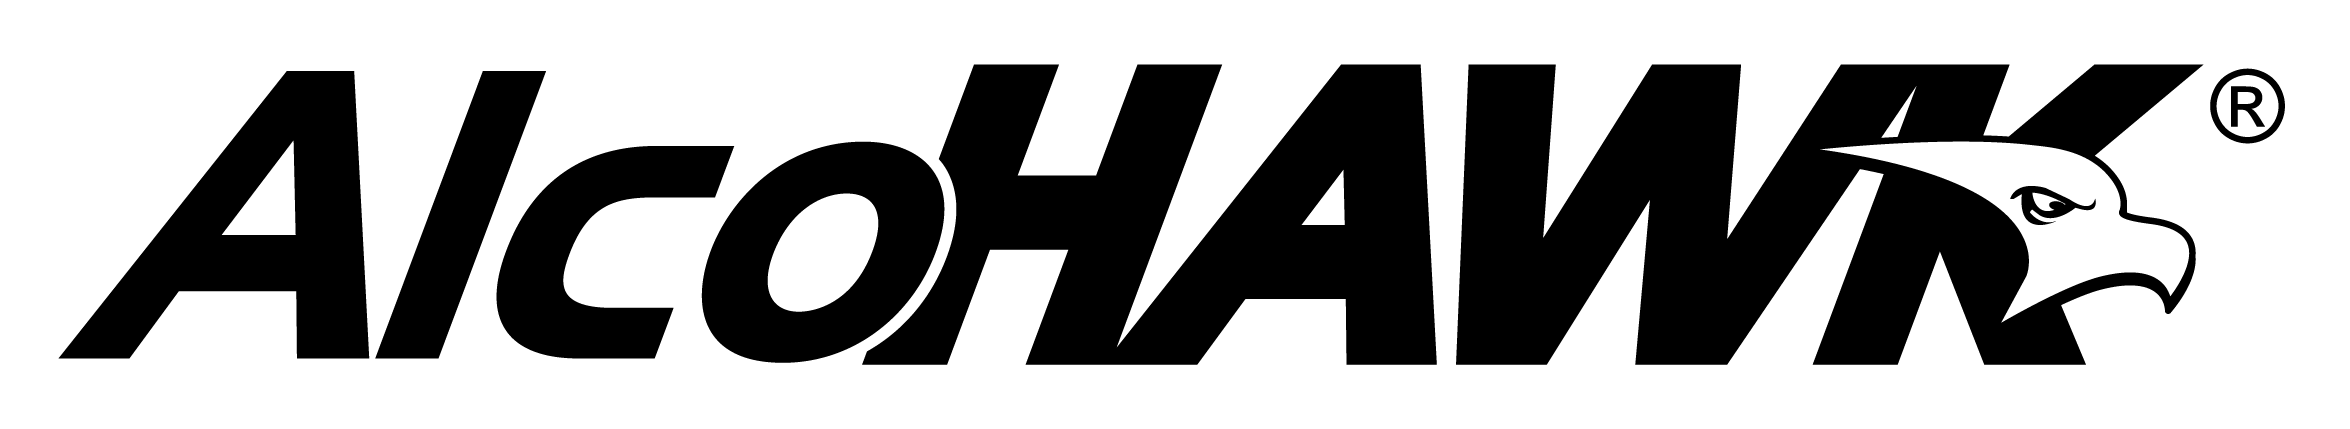 Alcohawk Logo photo - 1